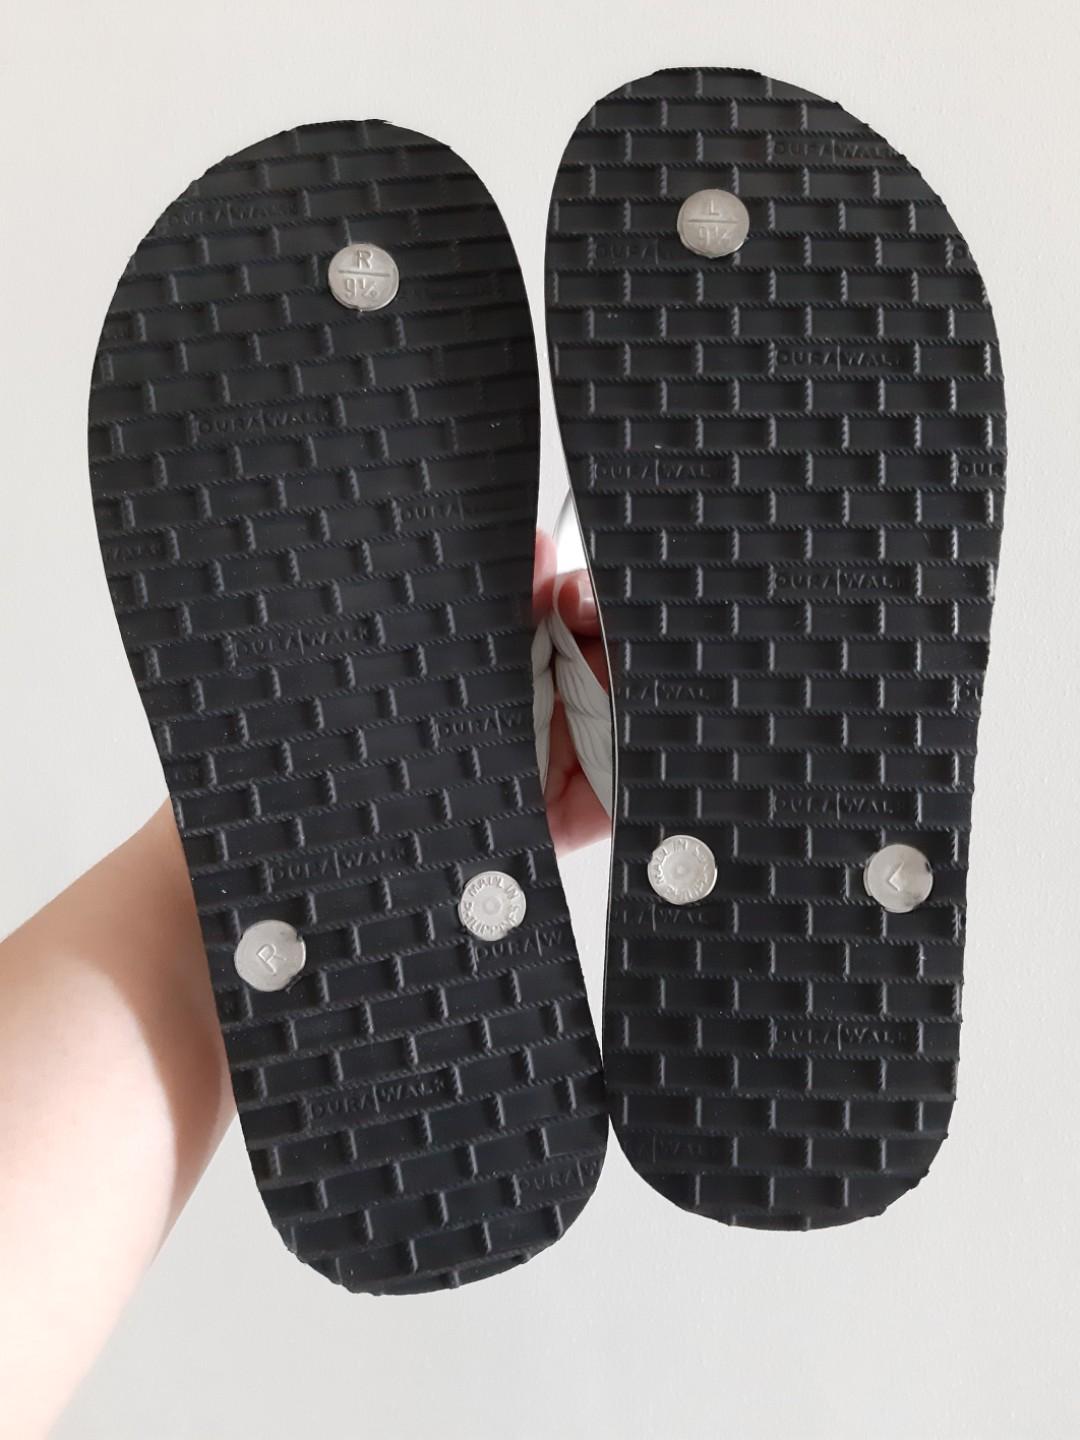 Durawalk Slippers (Size 8-9), Women's 